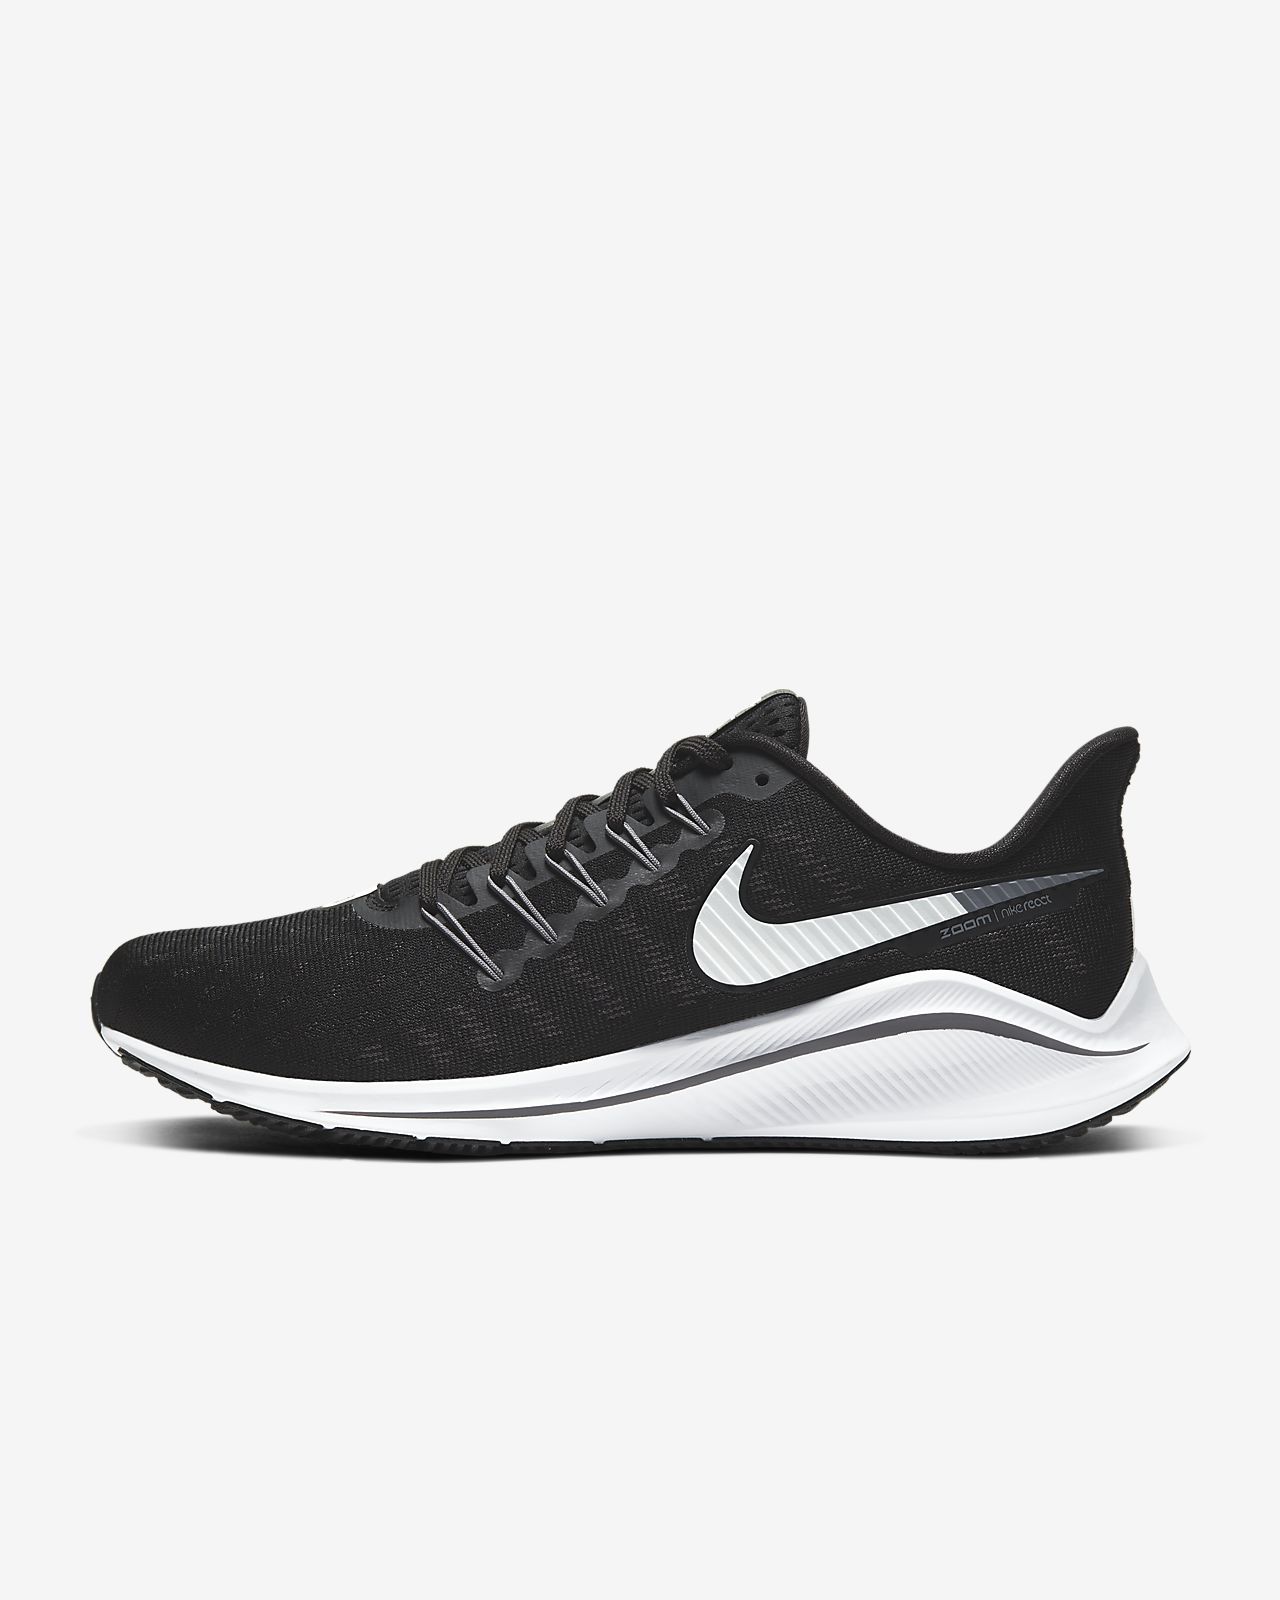 Nike Air Zoom Vomero 14 Men's Running Shoe. Nike SG